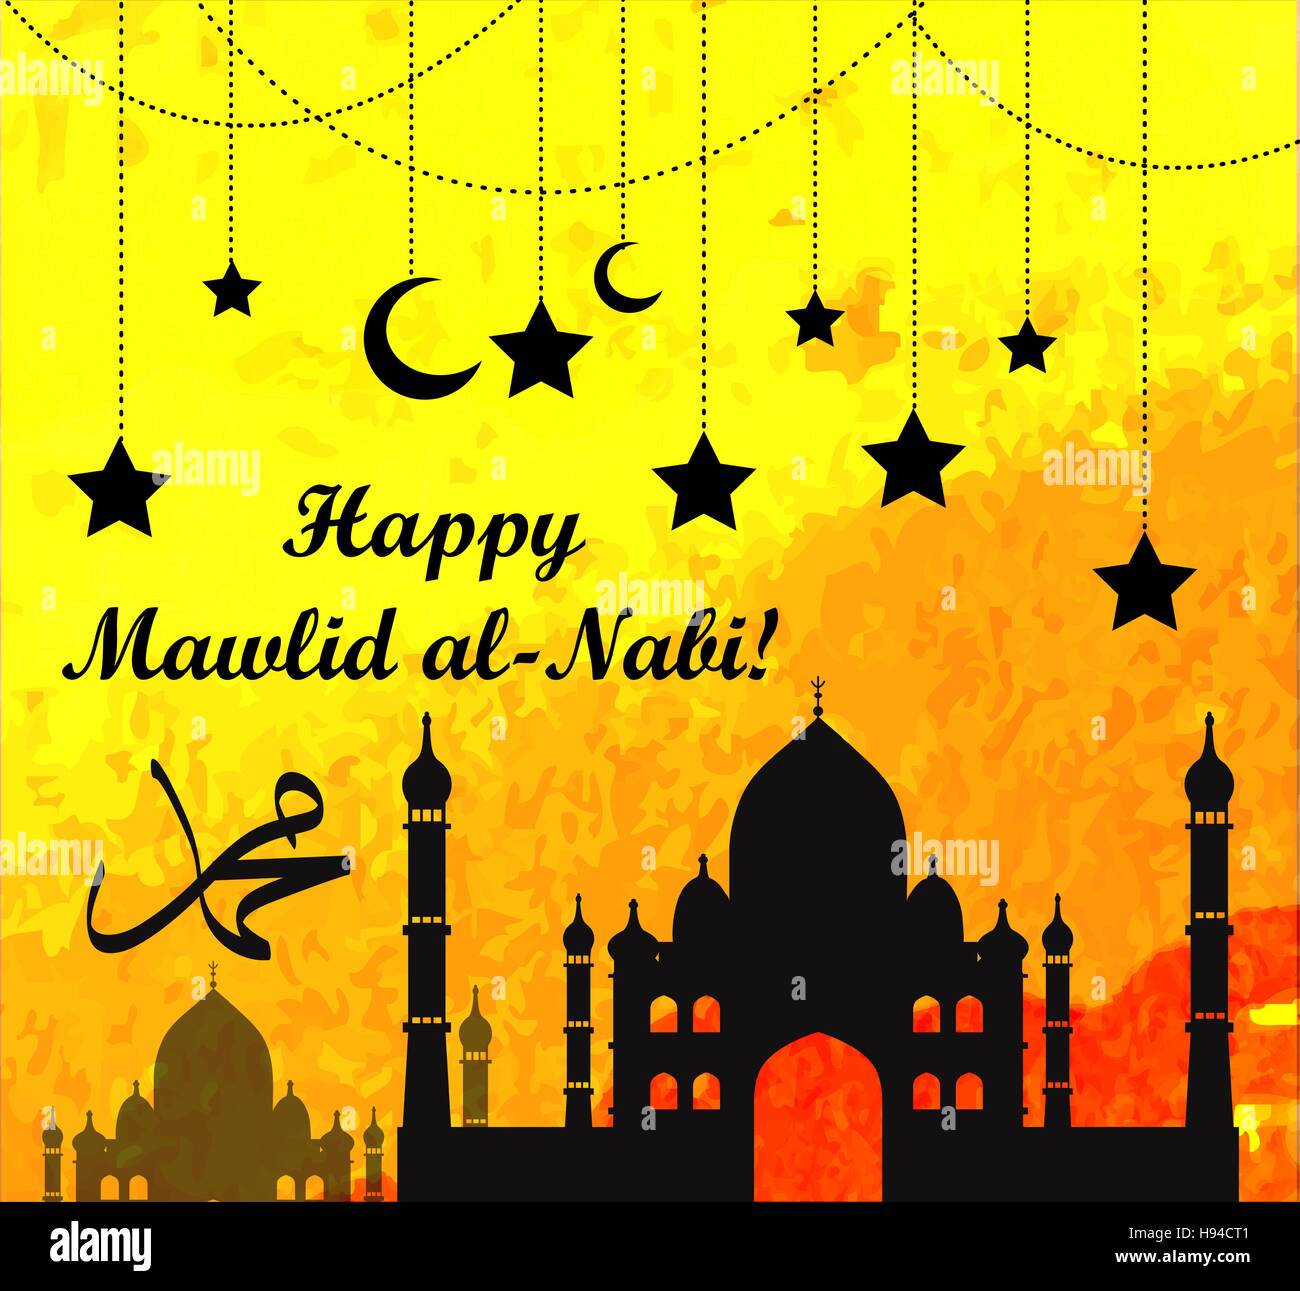 mawlid-al-nabi-the-birthday-of-the-prophet-muhammad-greeting-card-H94CT1.jpg